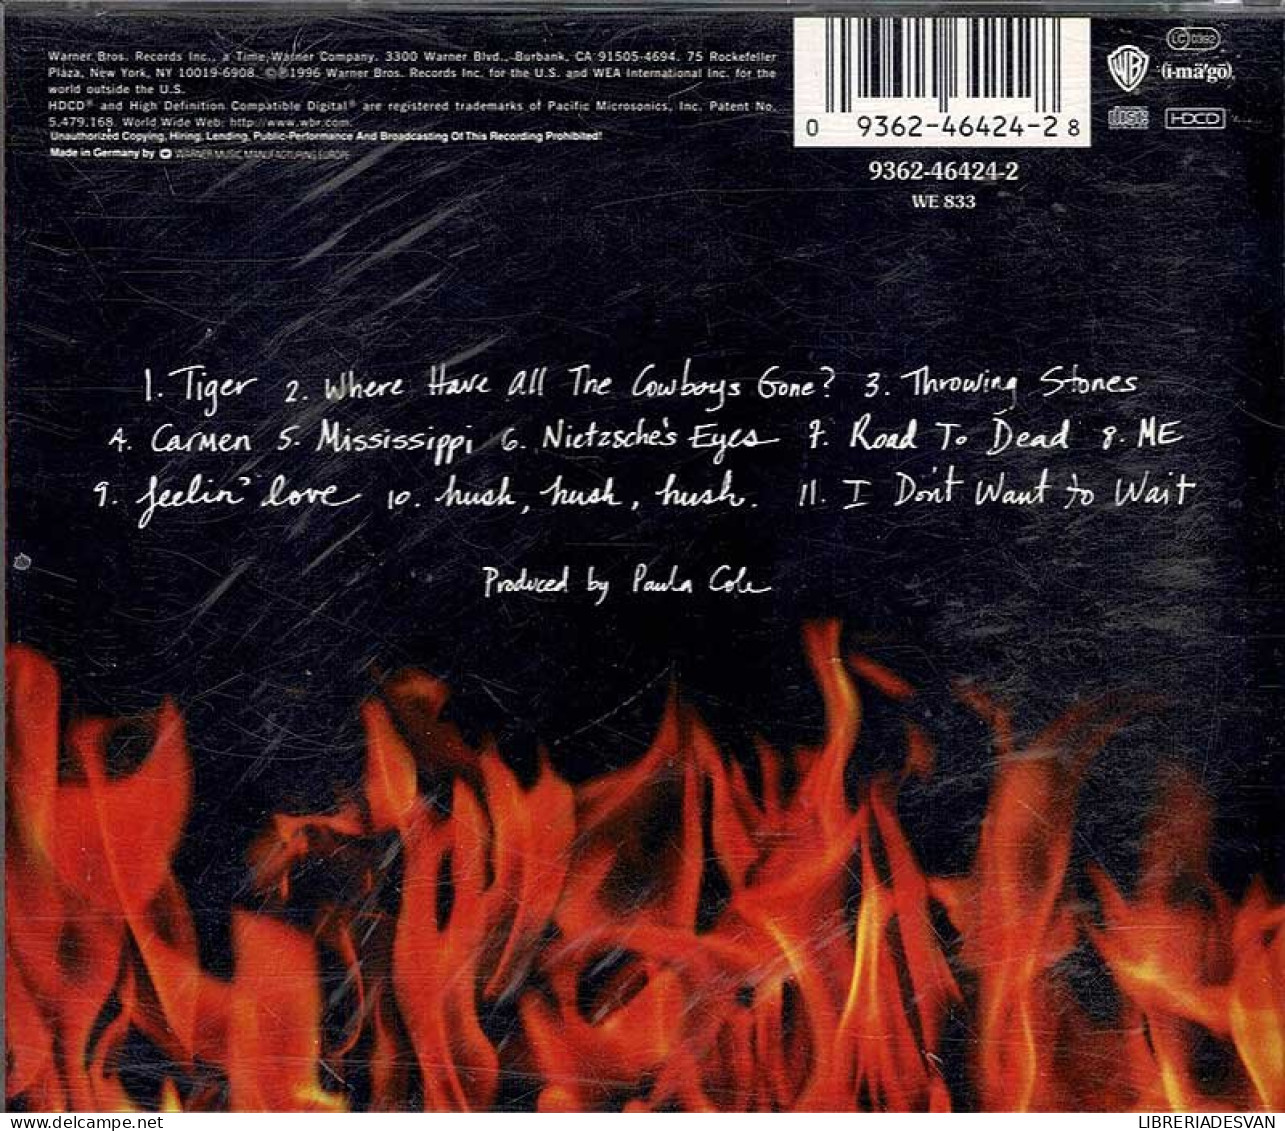 Paula Cole - This Fire. CD - Disco, Pop